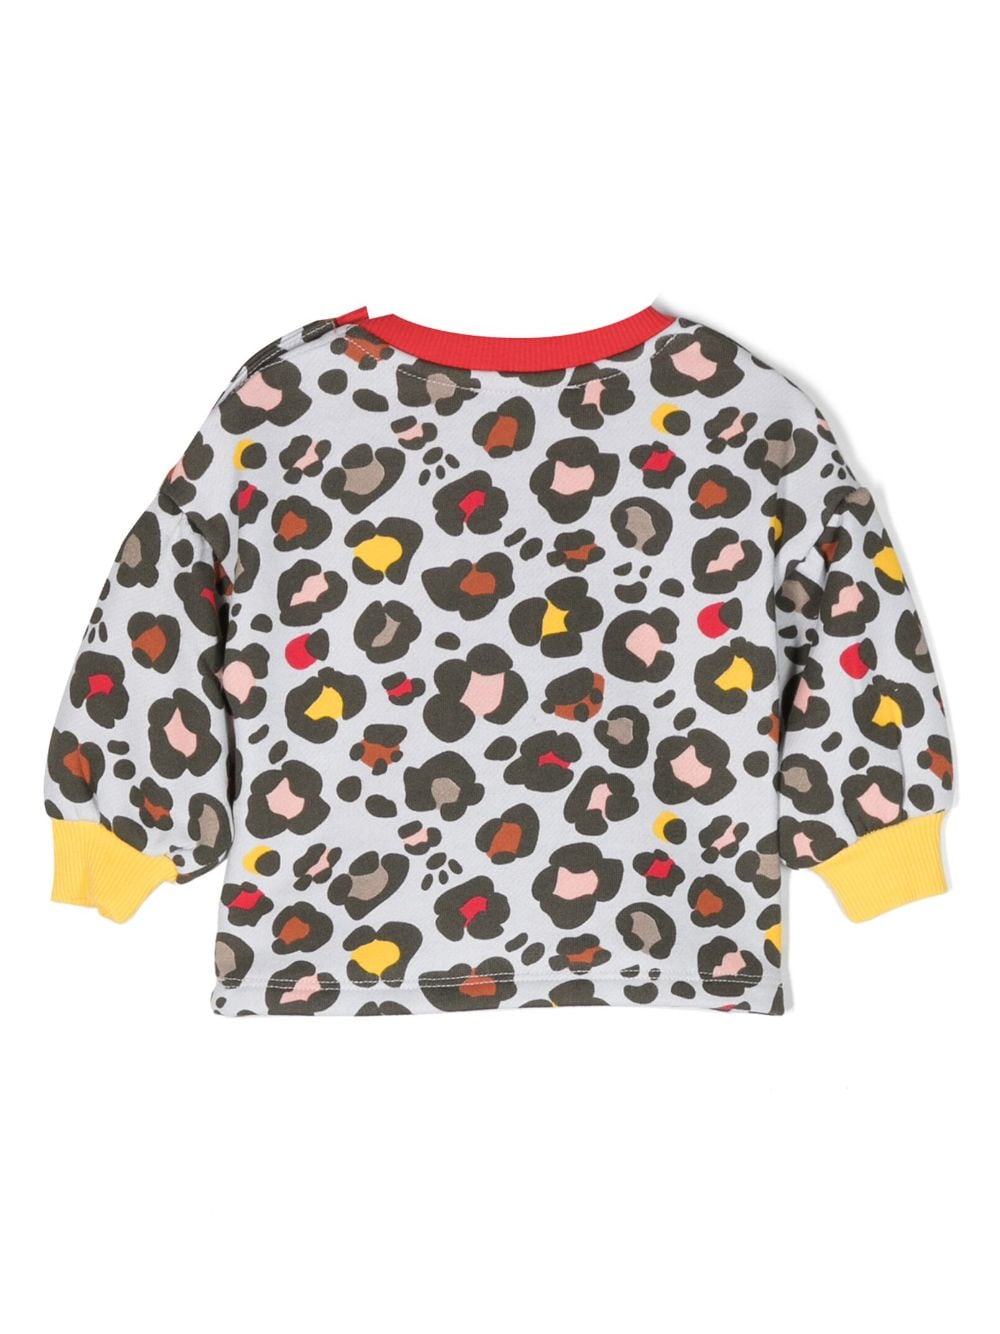 Kenzo Leopard Print Baby Sweatshirt